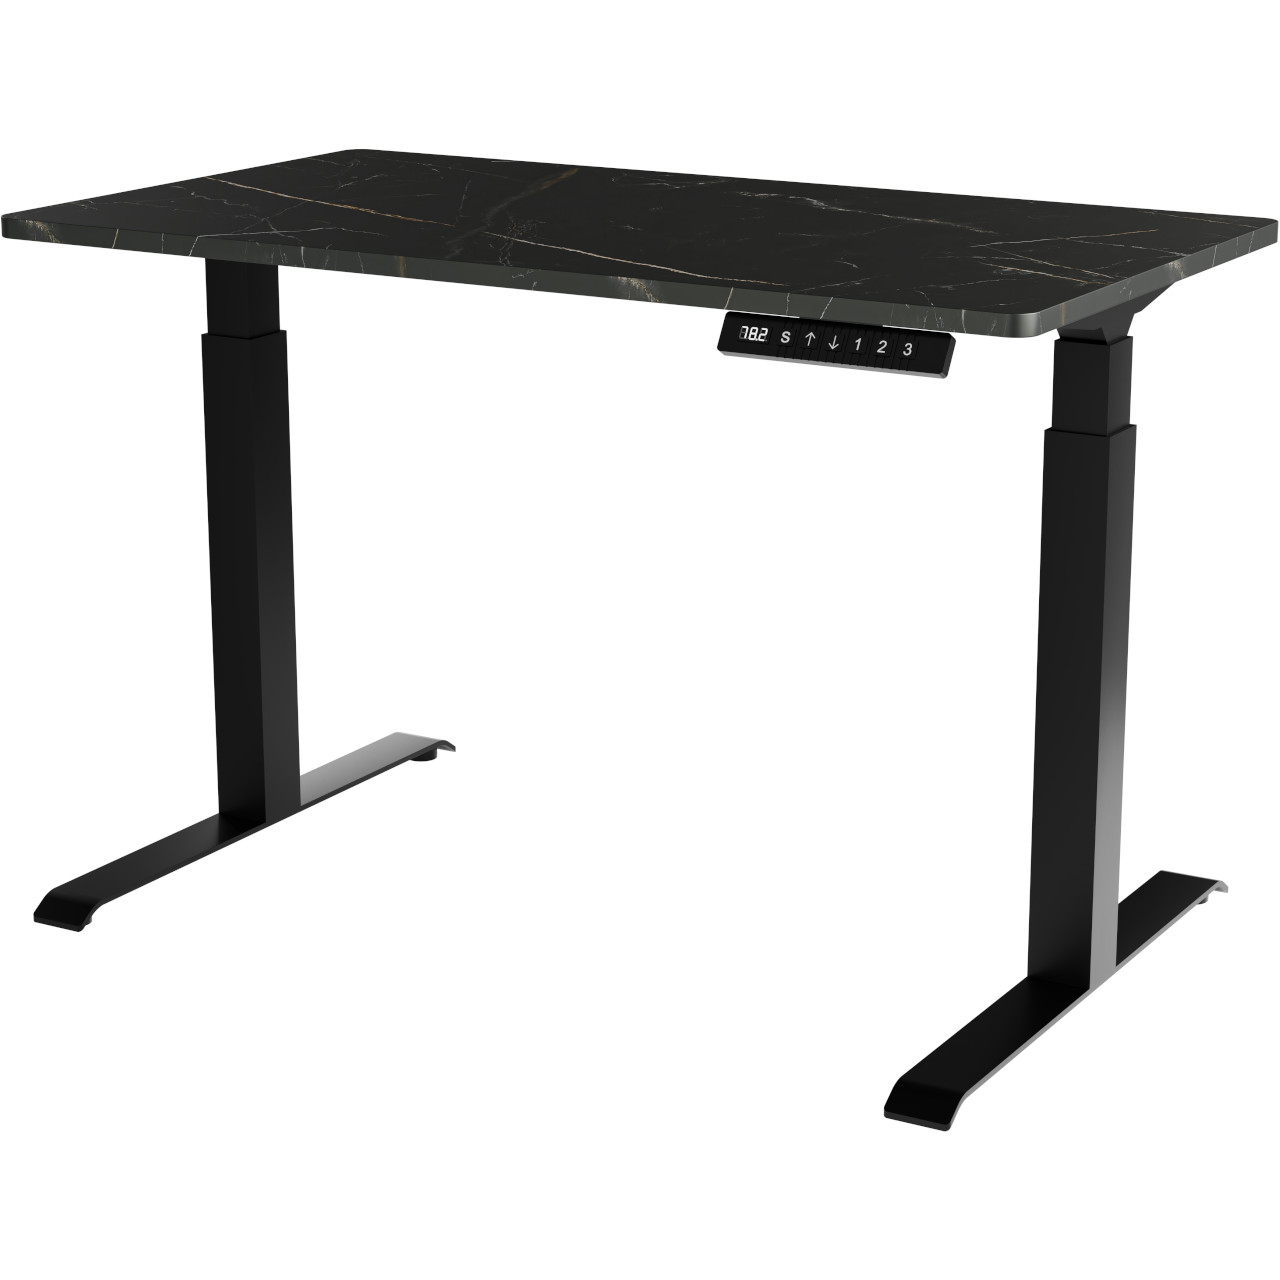 Height adjustable standing desk MOON black / san sebastian